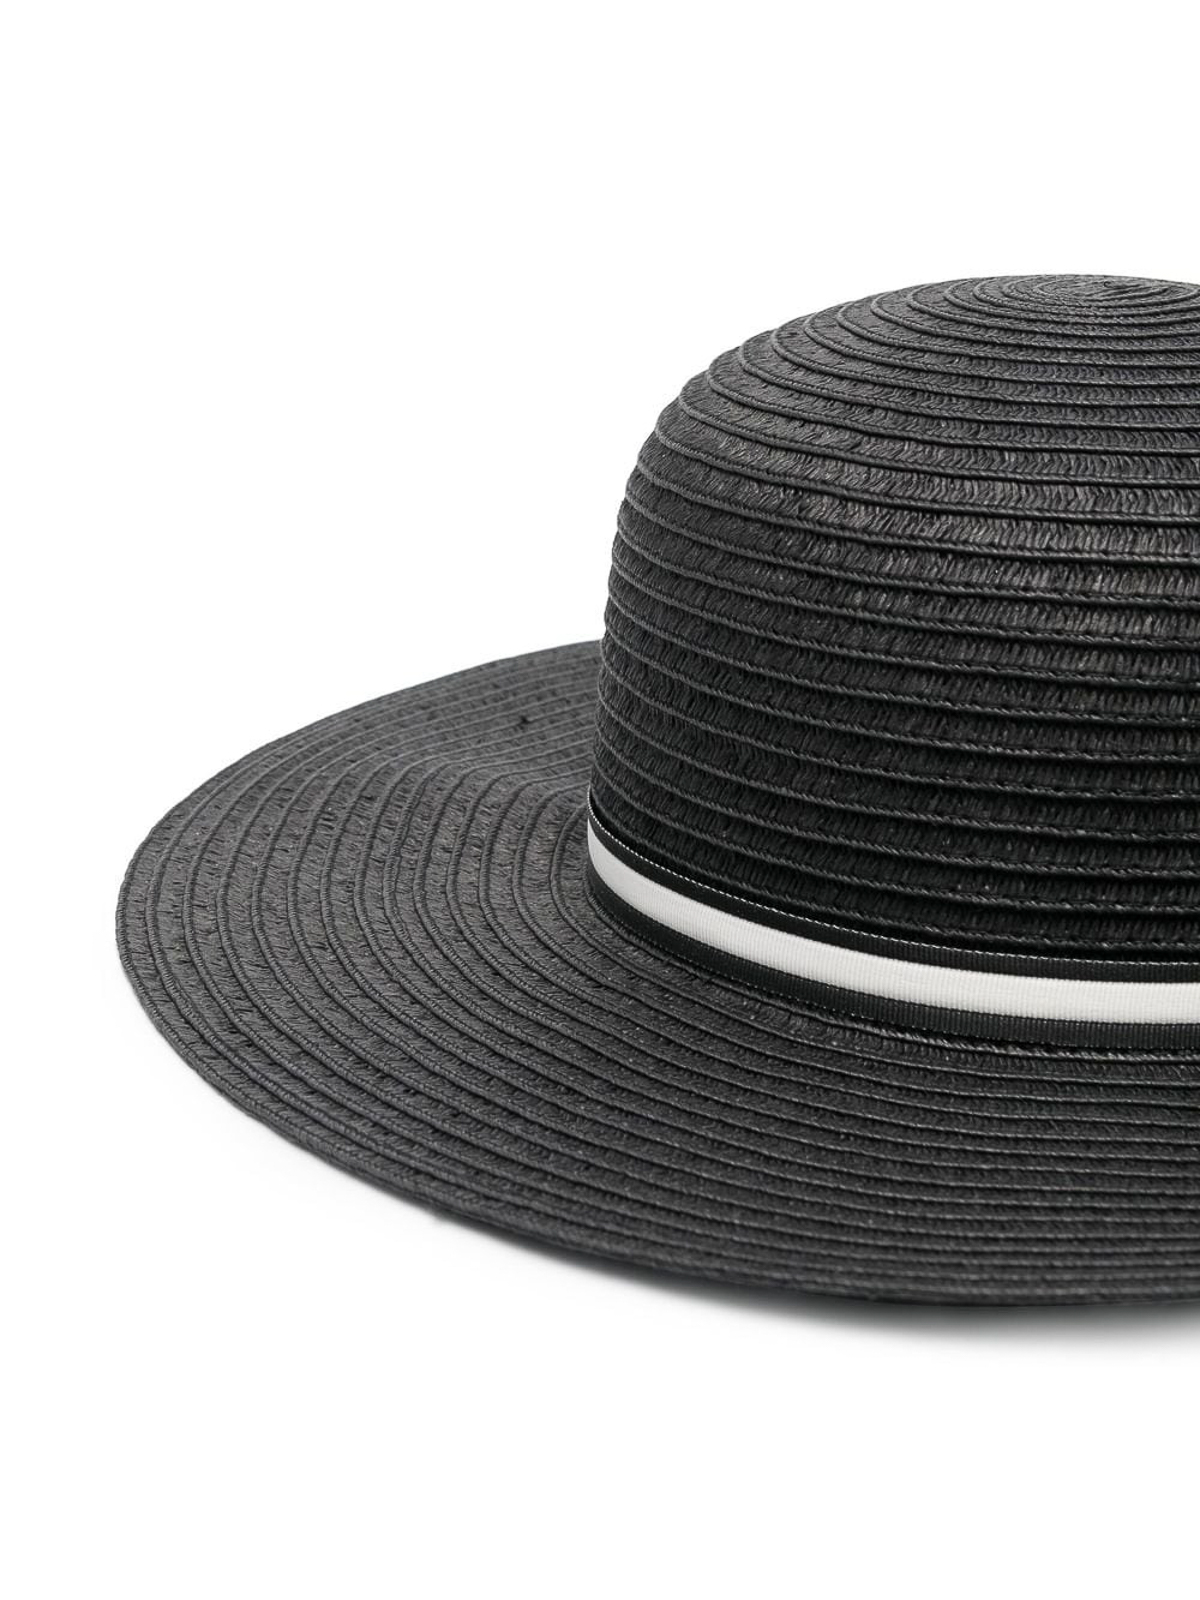 Shop Borsalino Interwoven Designed Giselle Hat In Black